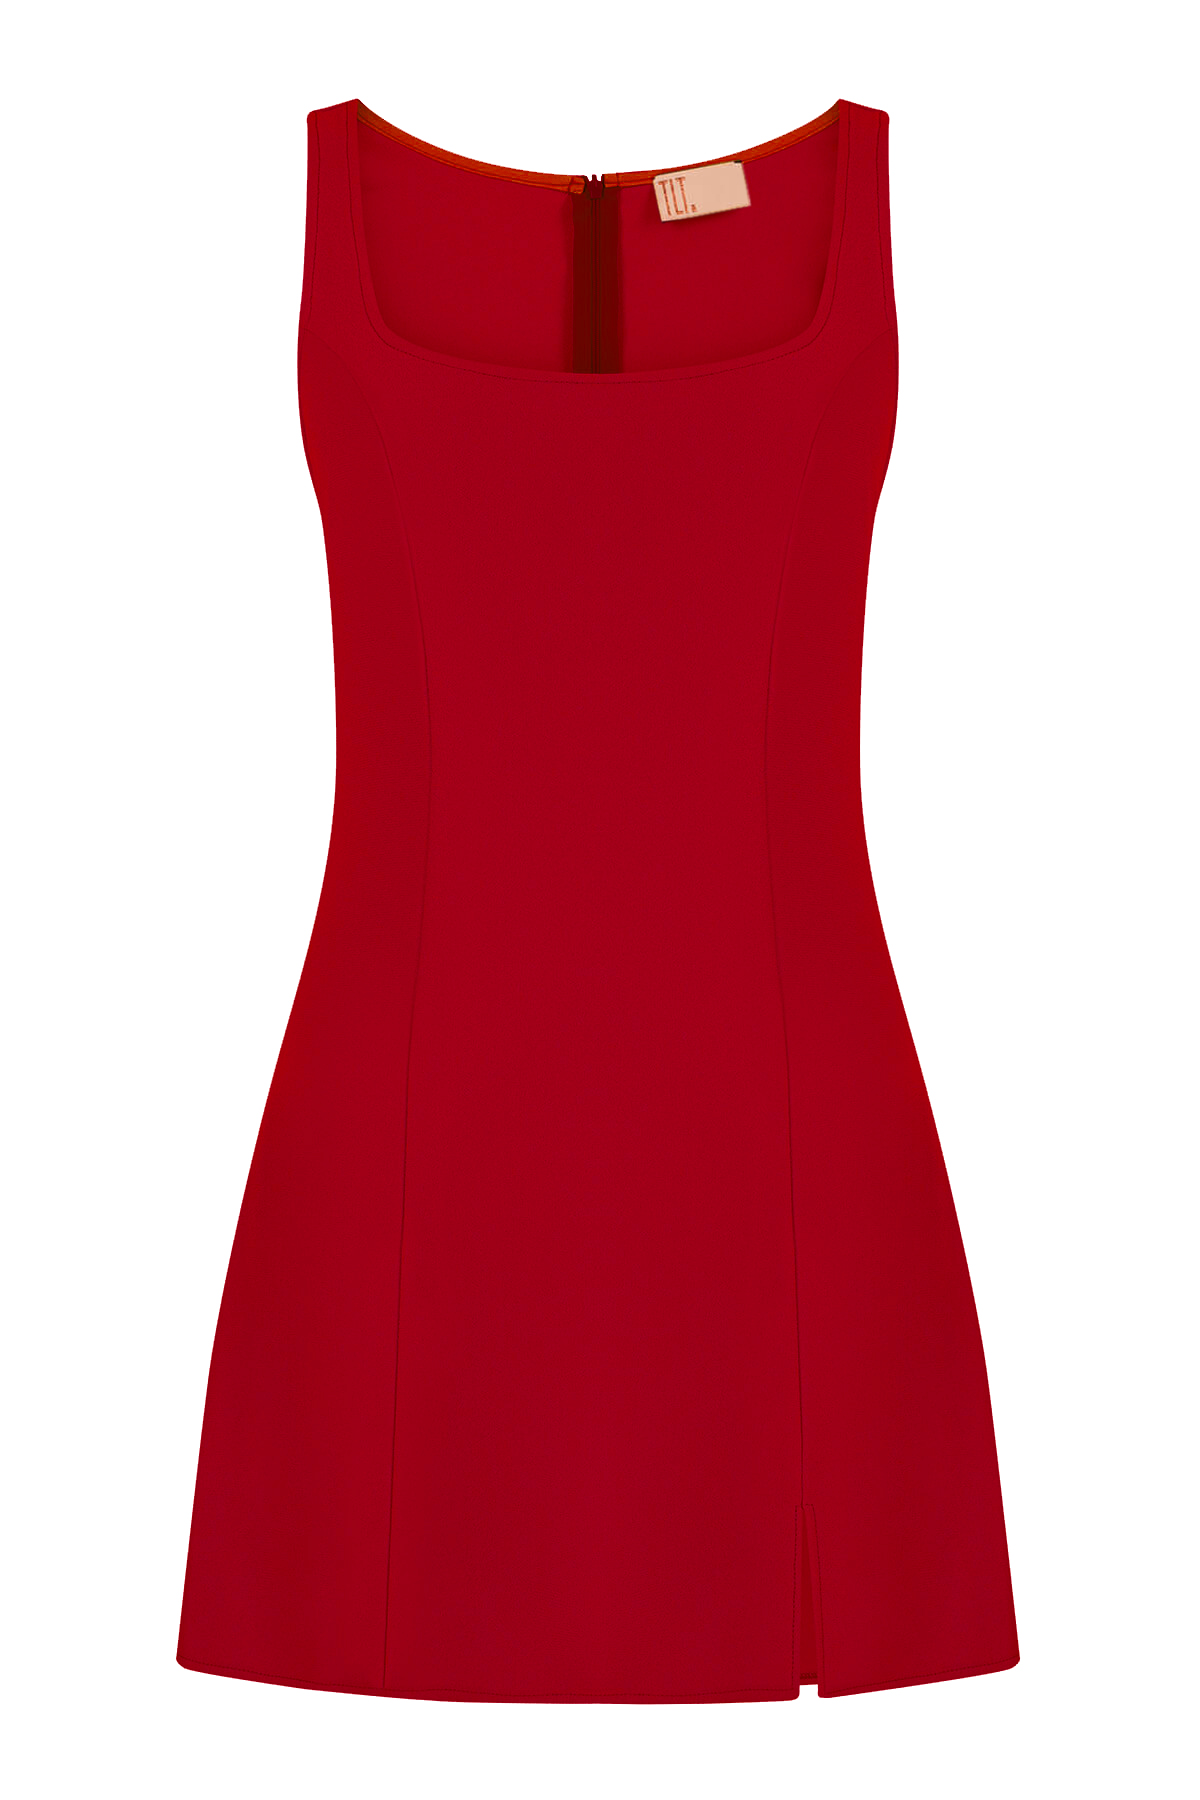 BARBIE Crepe Red Mini Athlete Dress